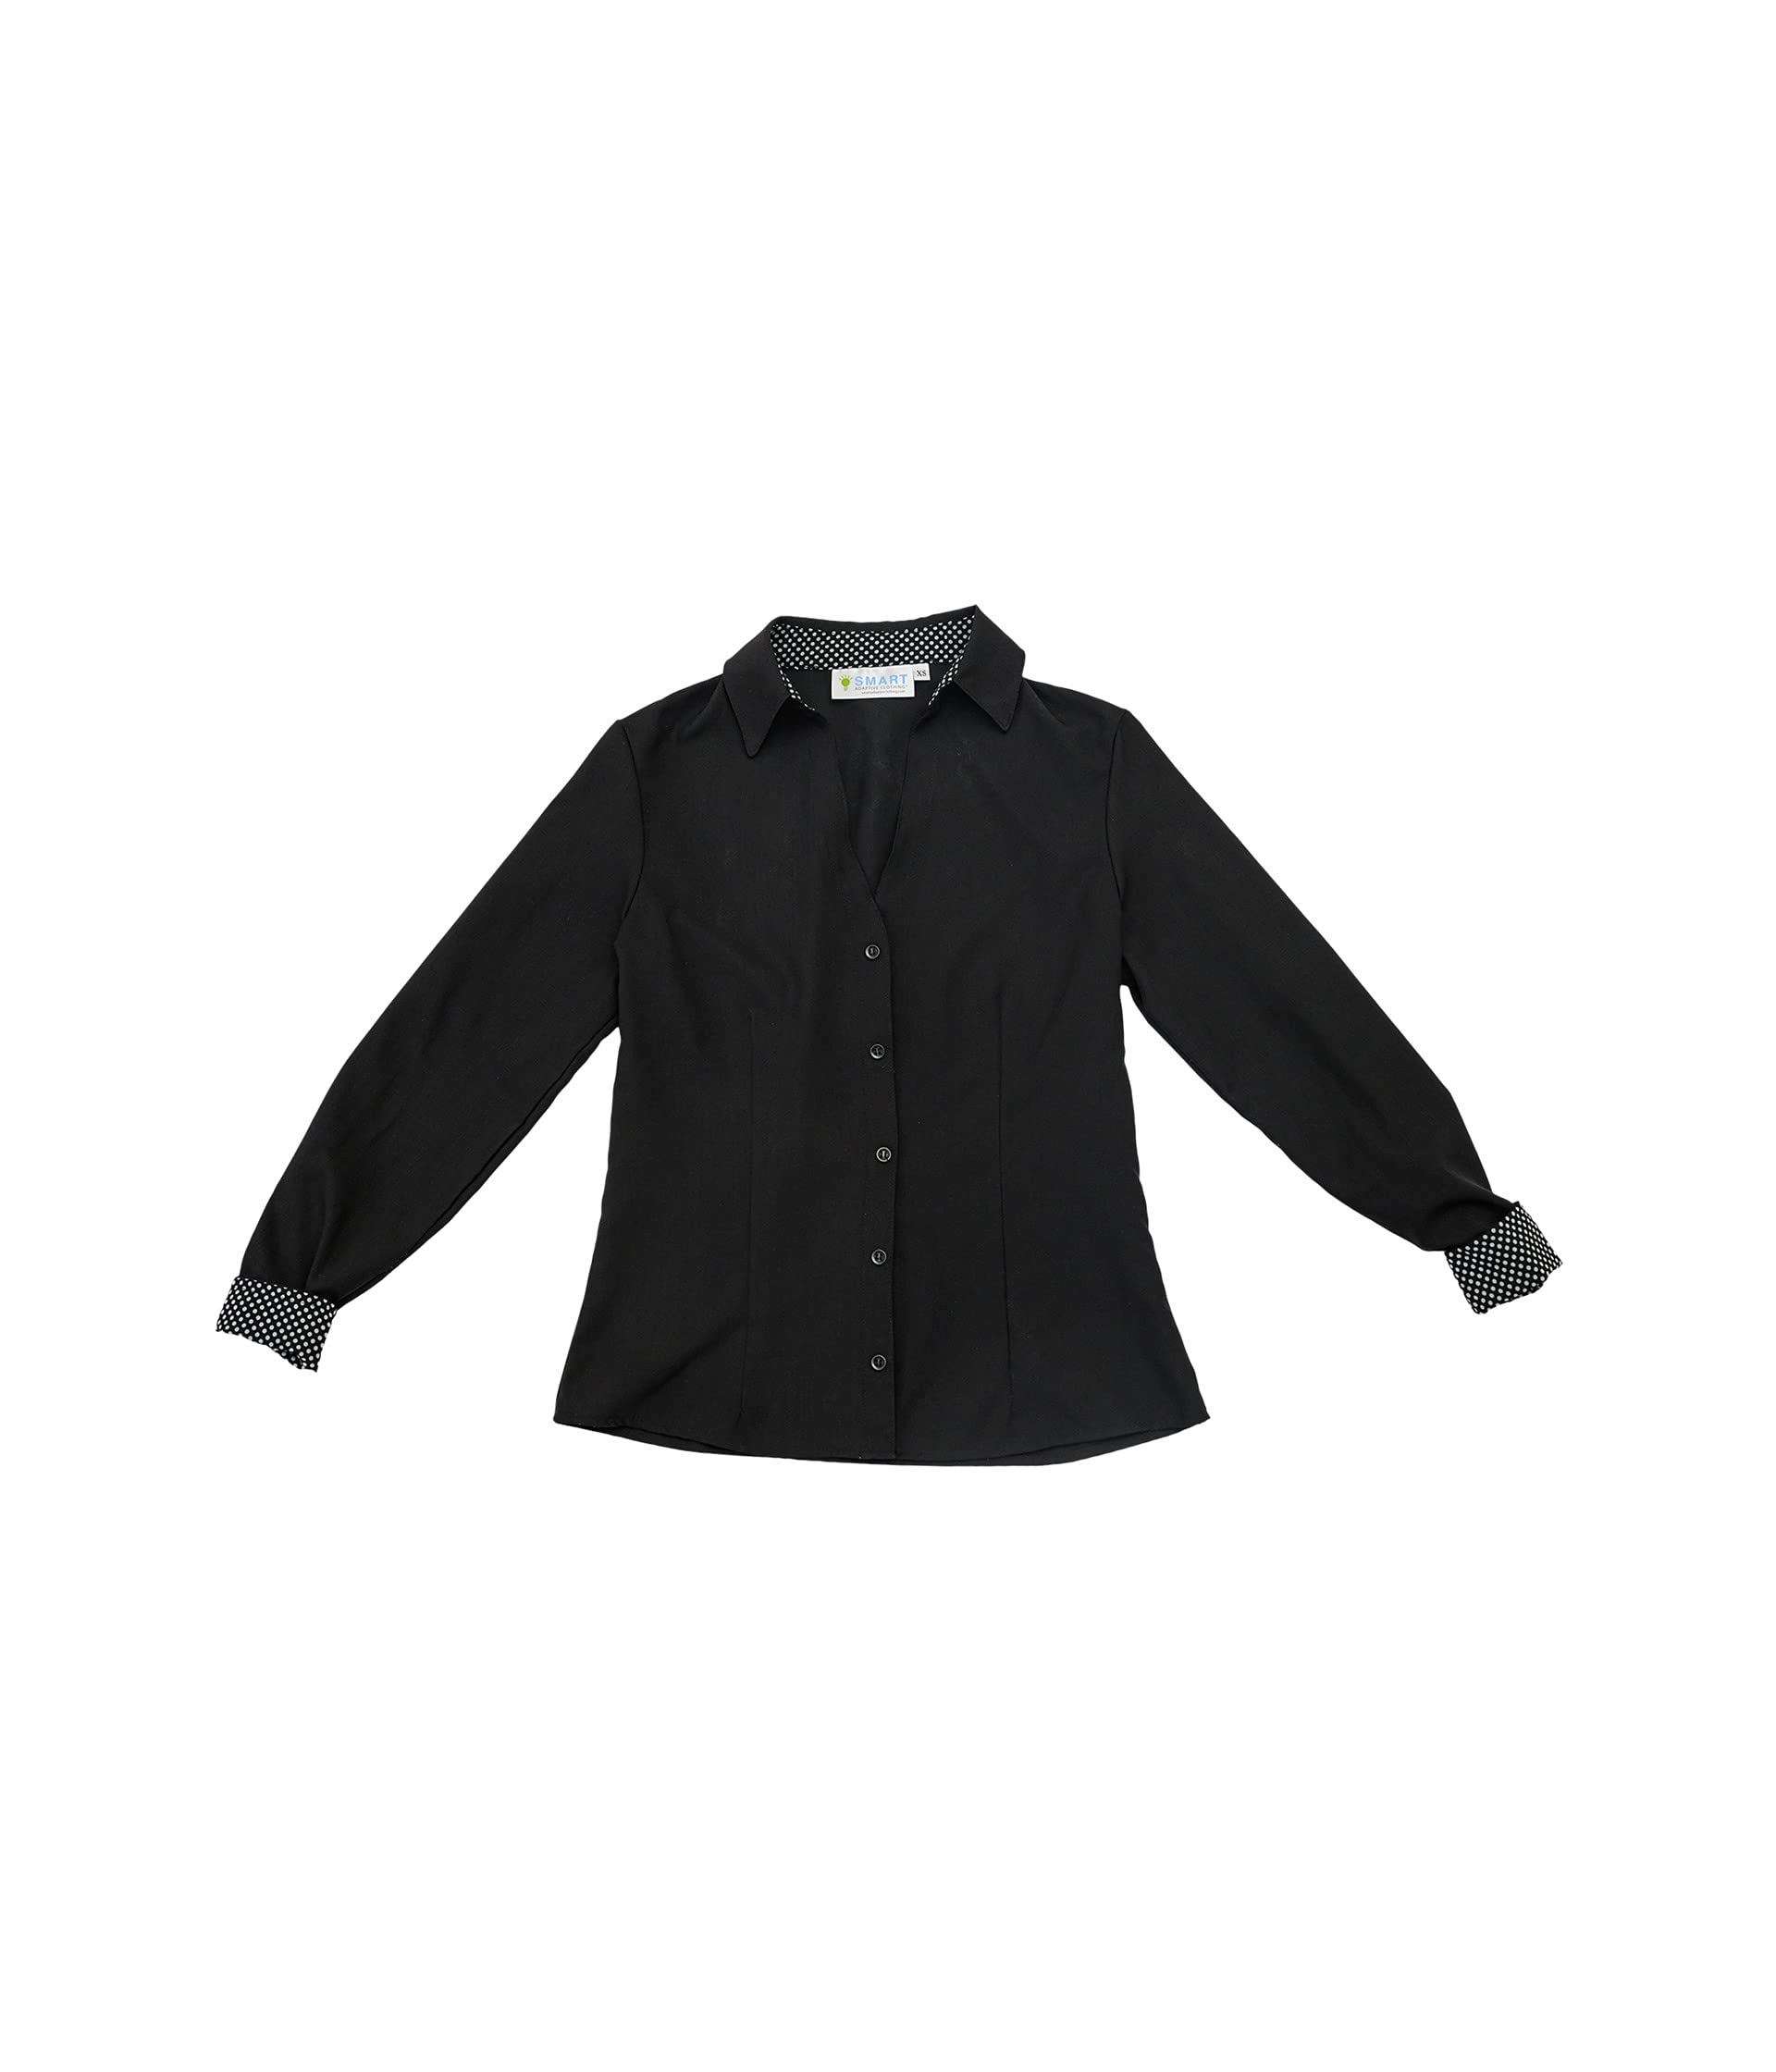 Адаптивная блузка Alana Soul Smart Adaptive Clothing